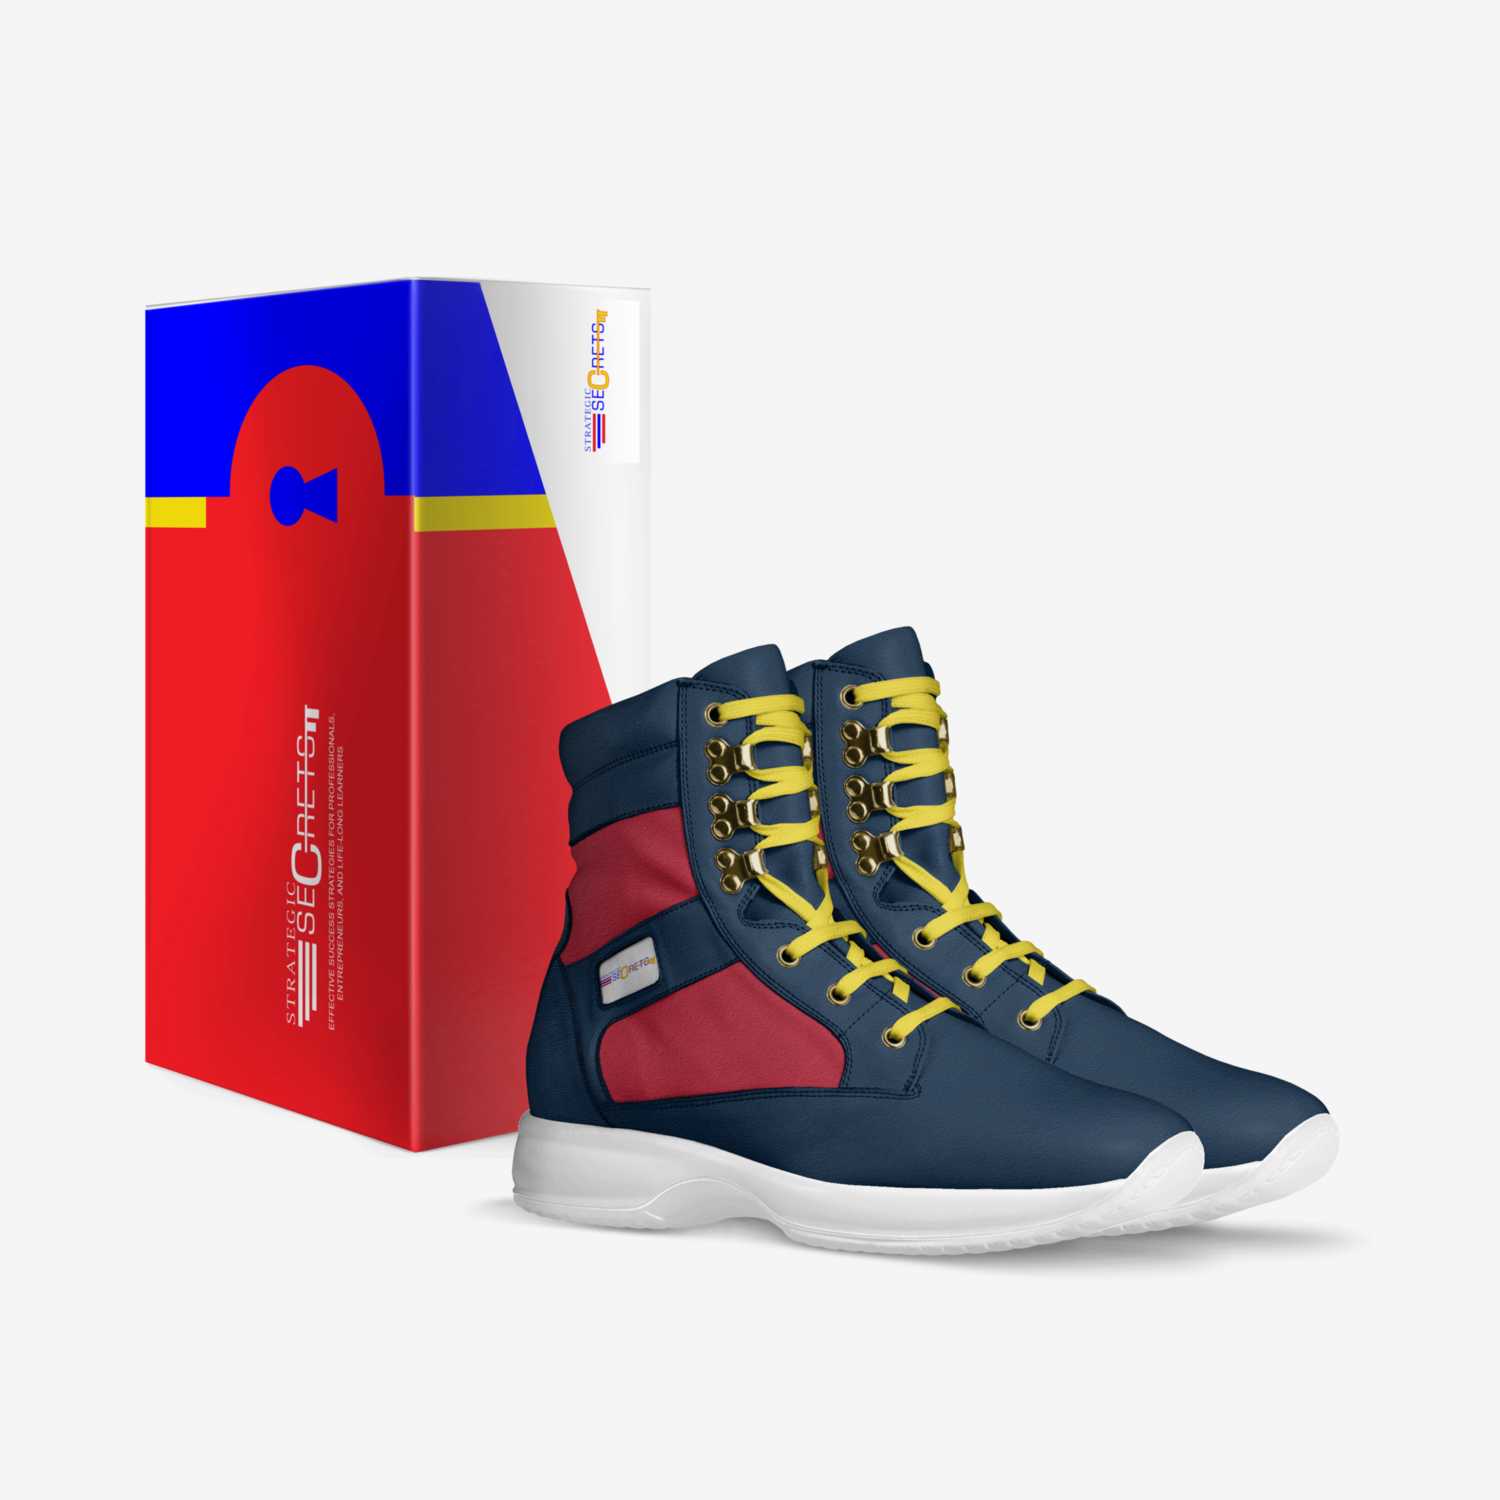 Strategic Secrets custom made in Italy shoes by Randrick Chance | Box view